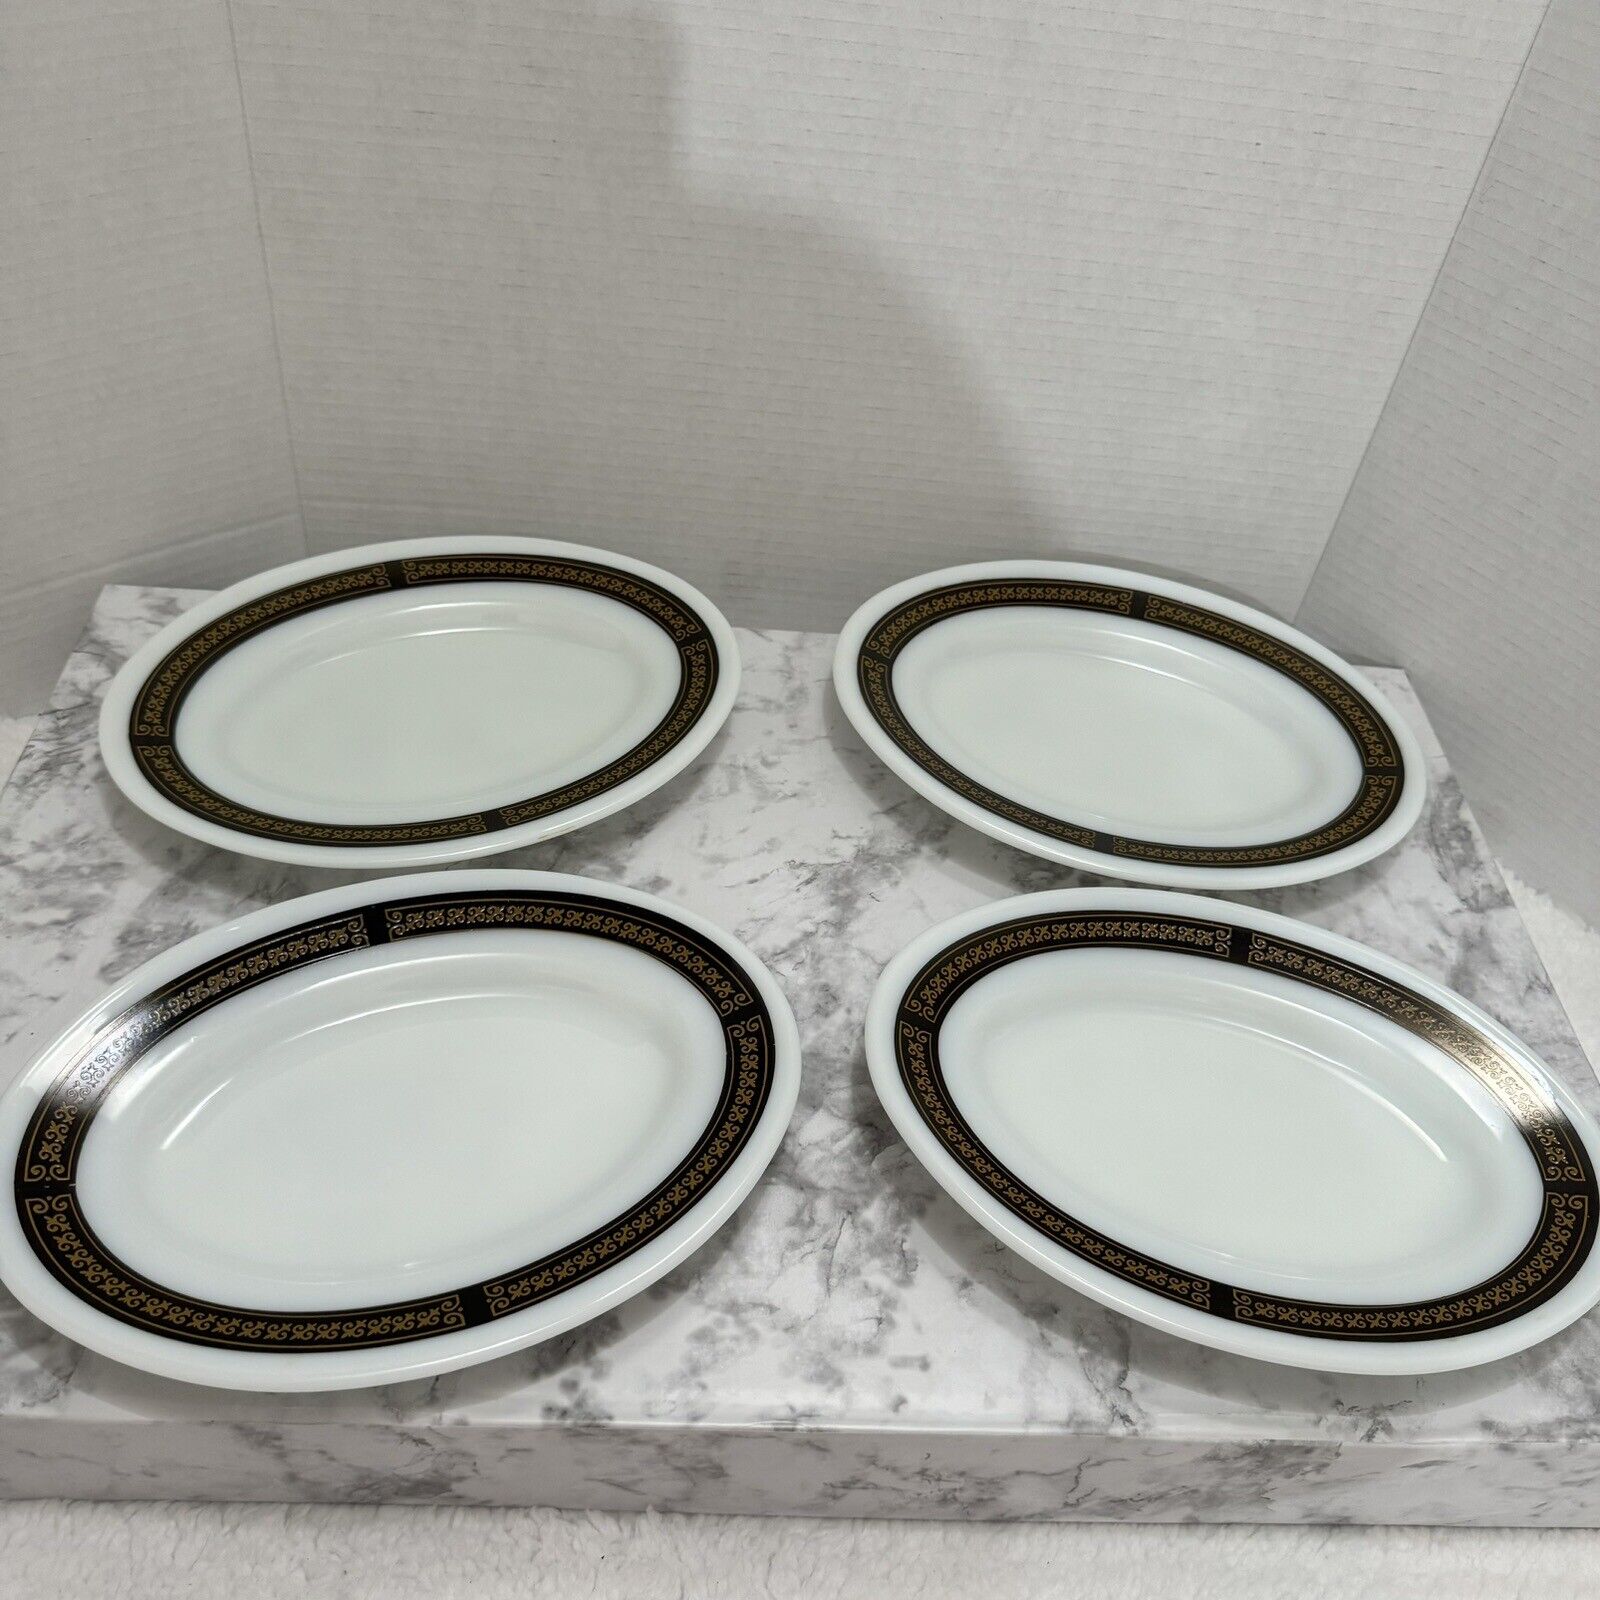 Vtng Pyrex Ebony Fleur De Lis Oval Plates Set Of 4 #794-6 by Corning Made In USA